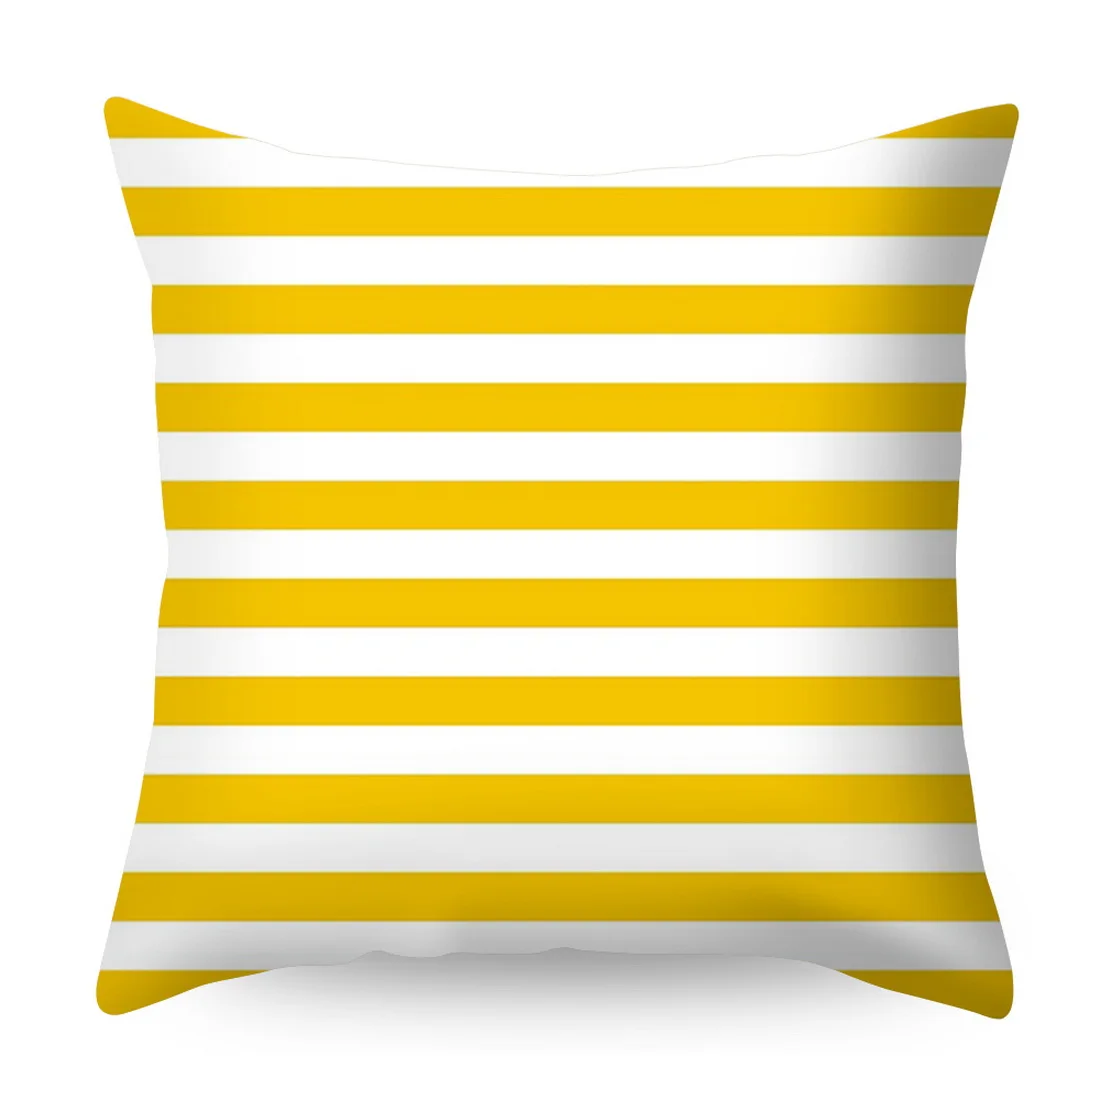 Желтый декоративный чехол для дивана, наволочка для дивана, наволочка для домашнего дивана, автомобиля, Геометрическая наволочка для домашнего декора